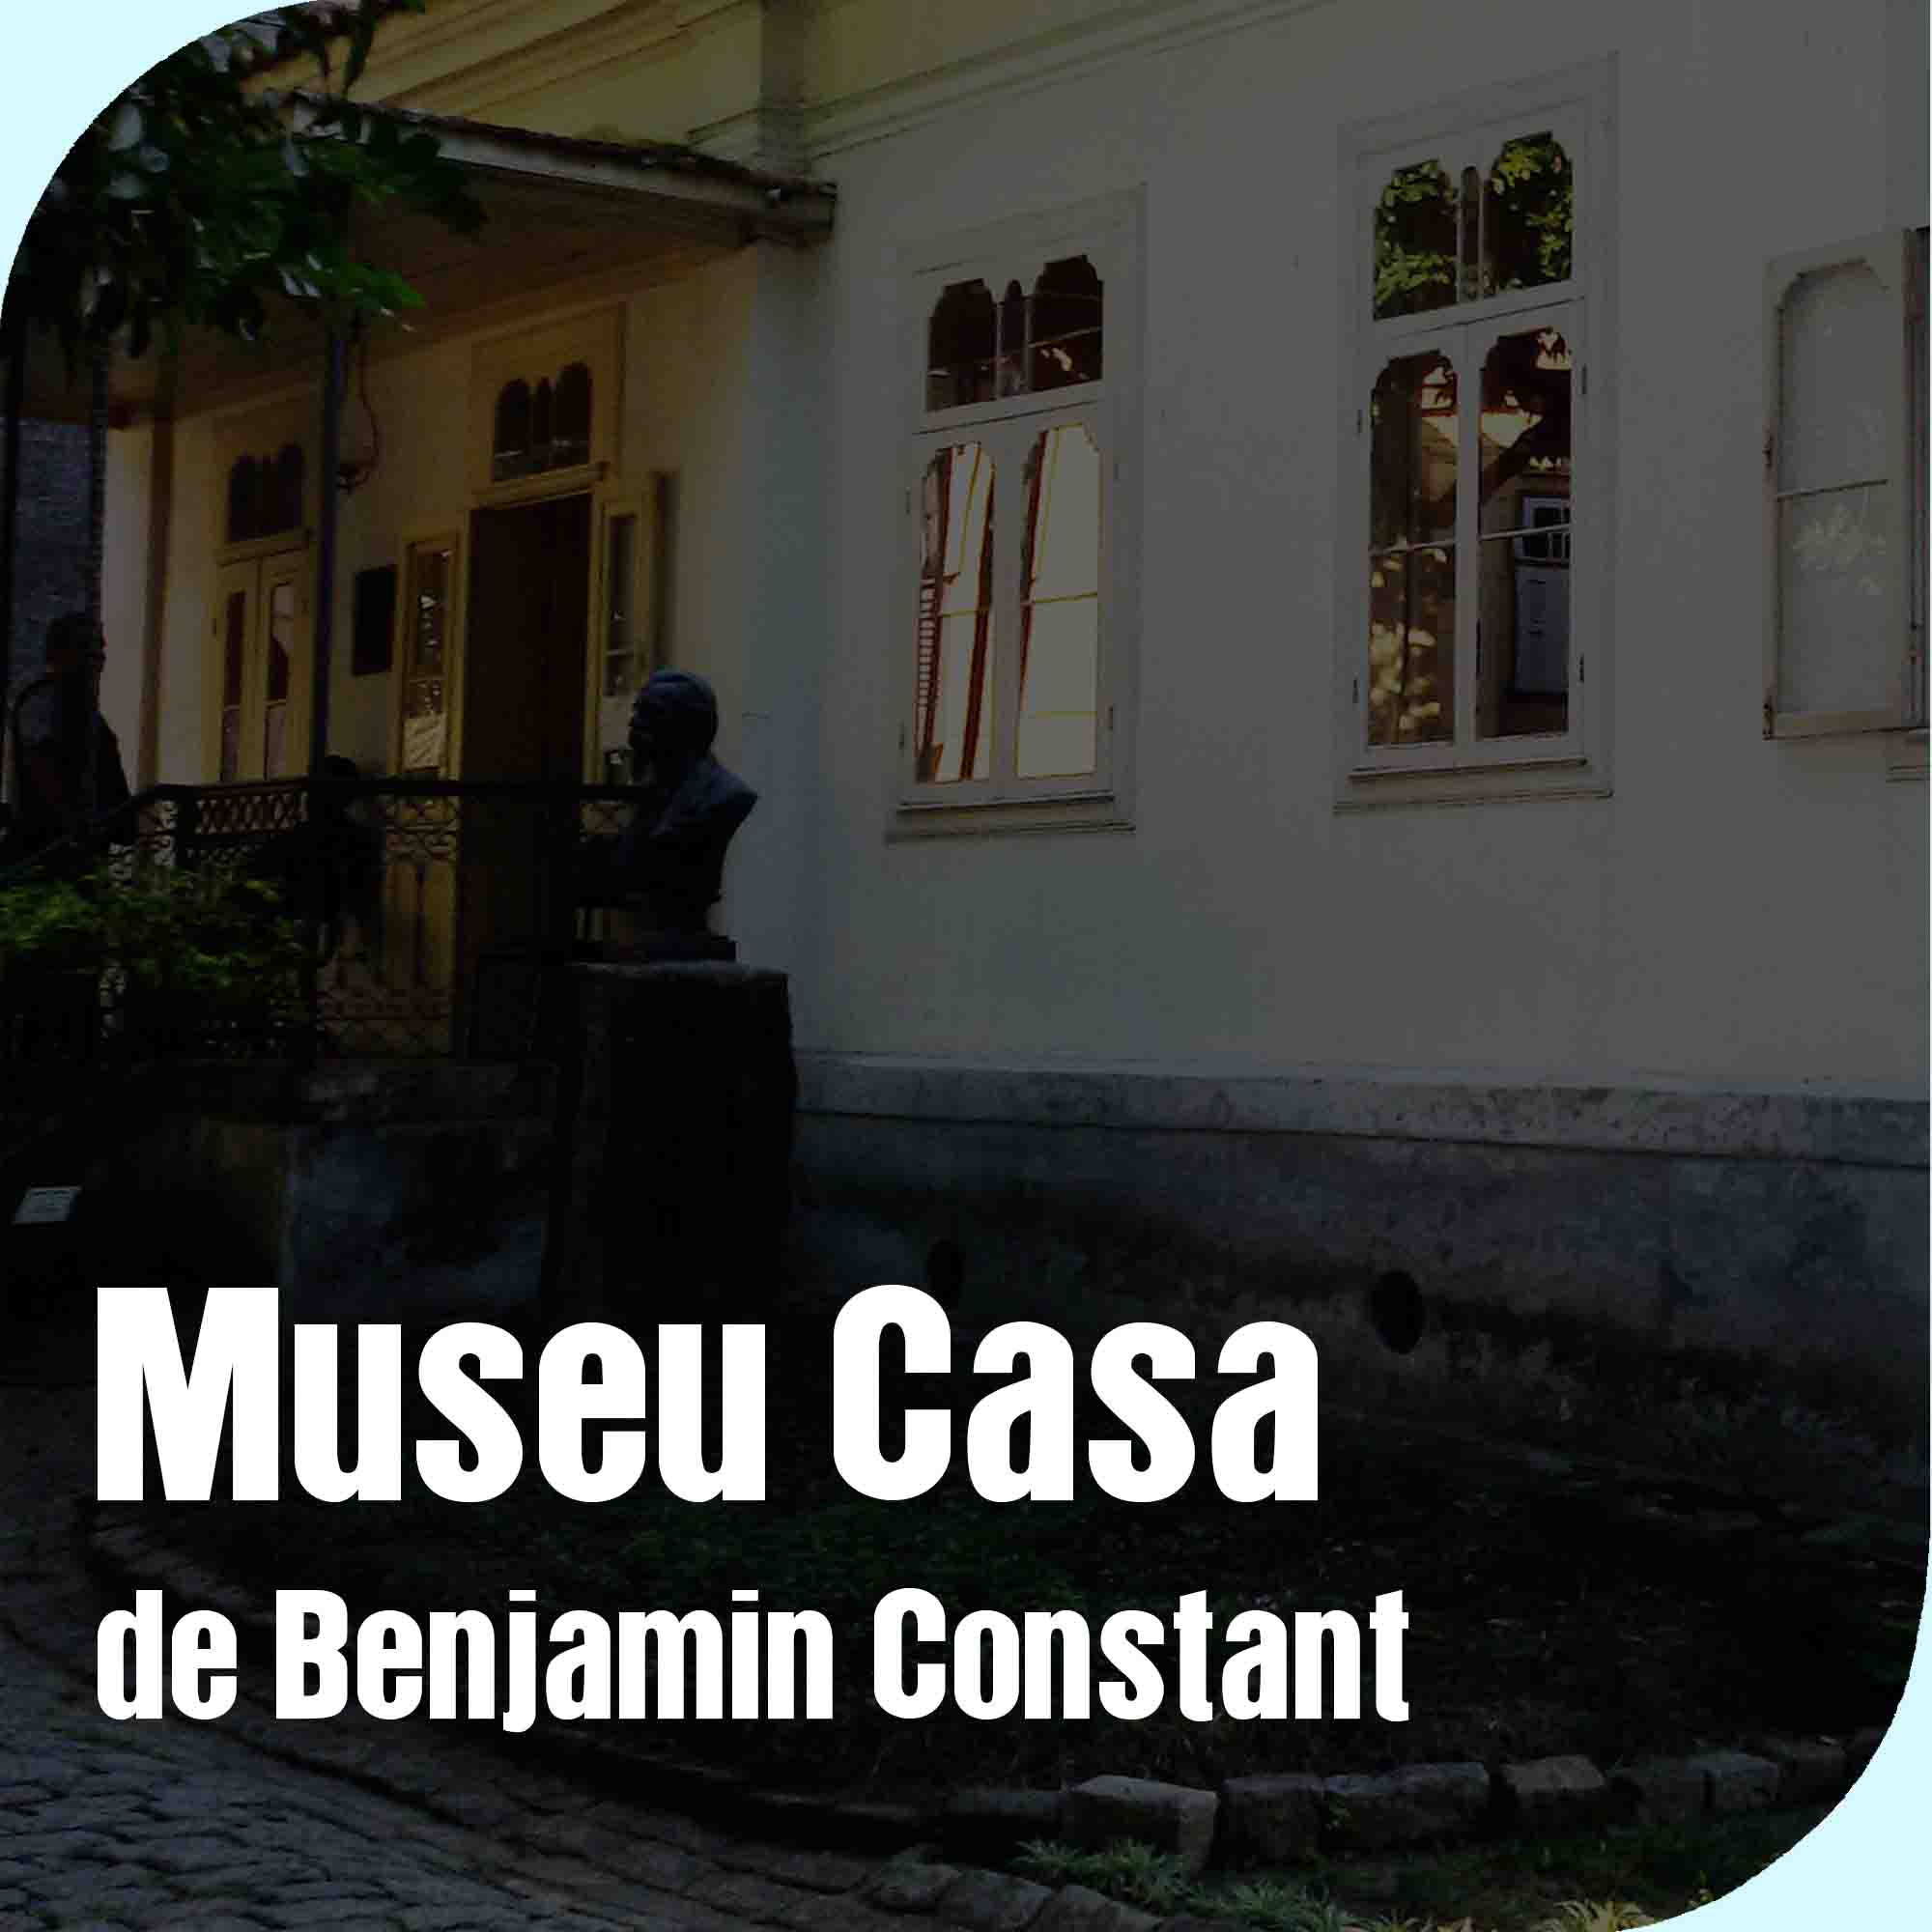 Museu Casa de Benjamin Constant